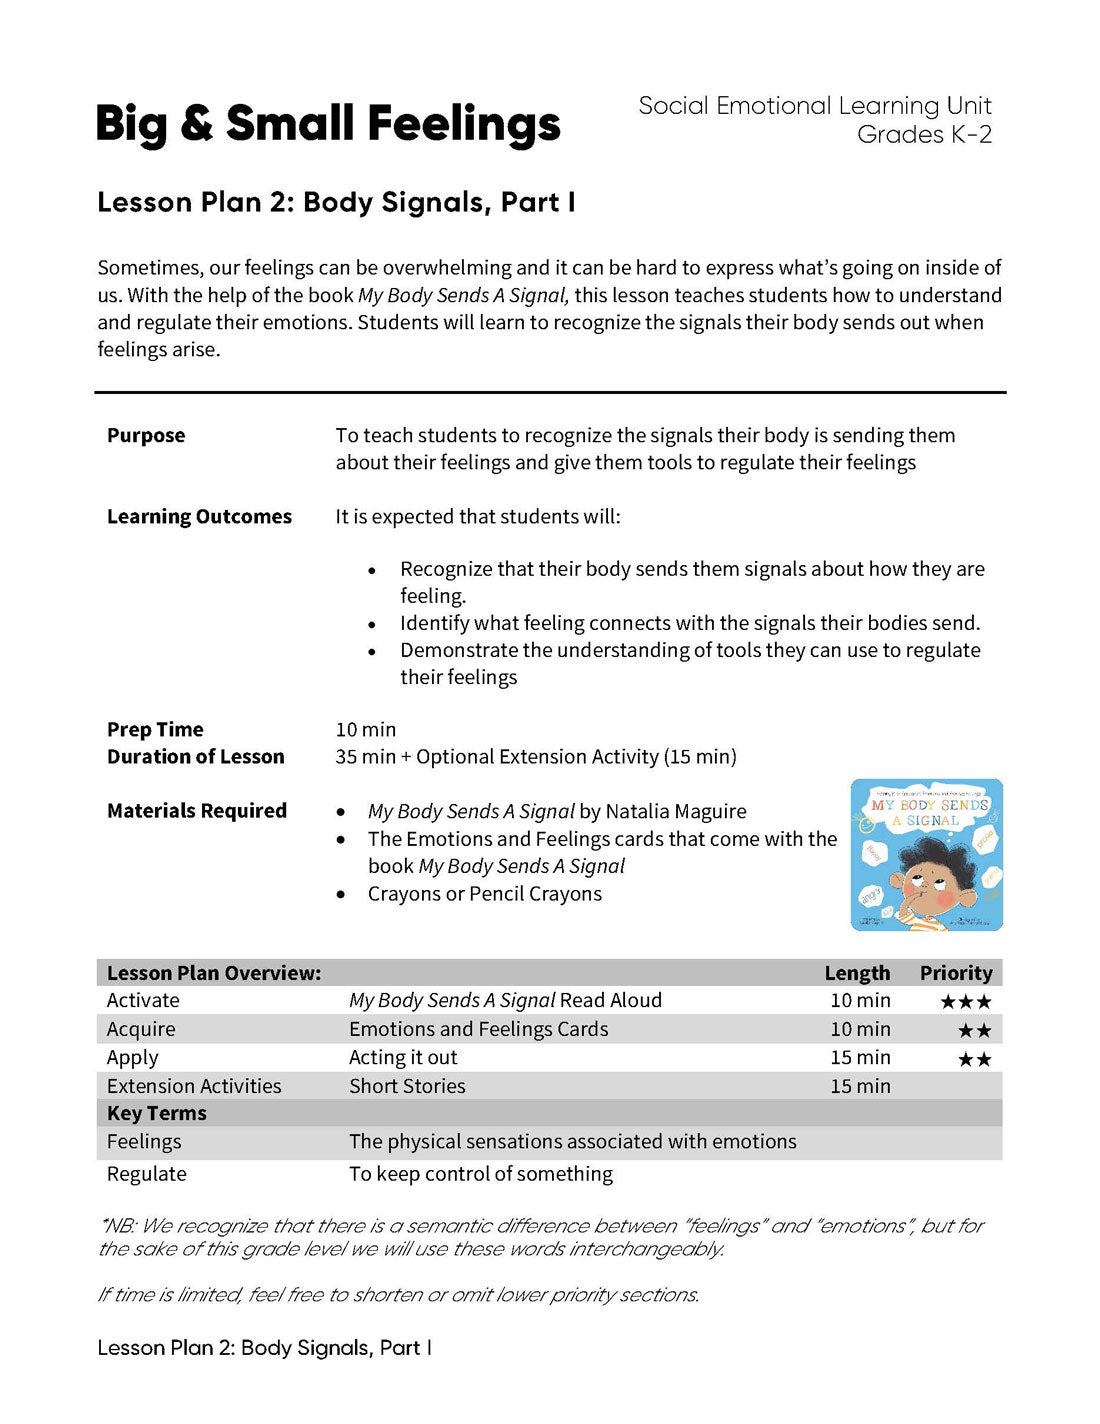 Lesson Plan 2: Body Signals, Part I